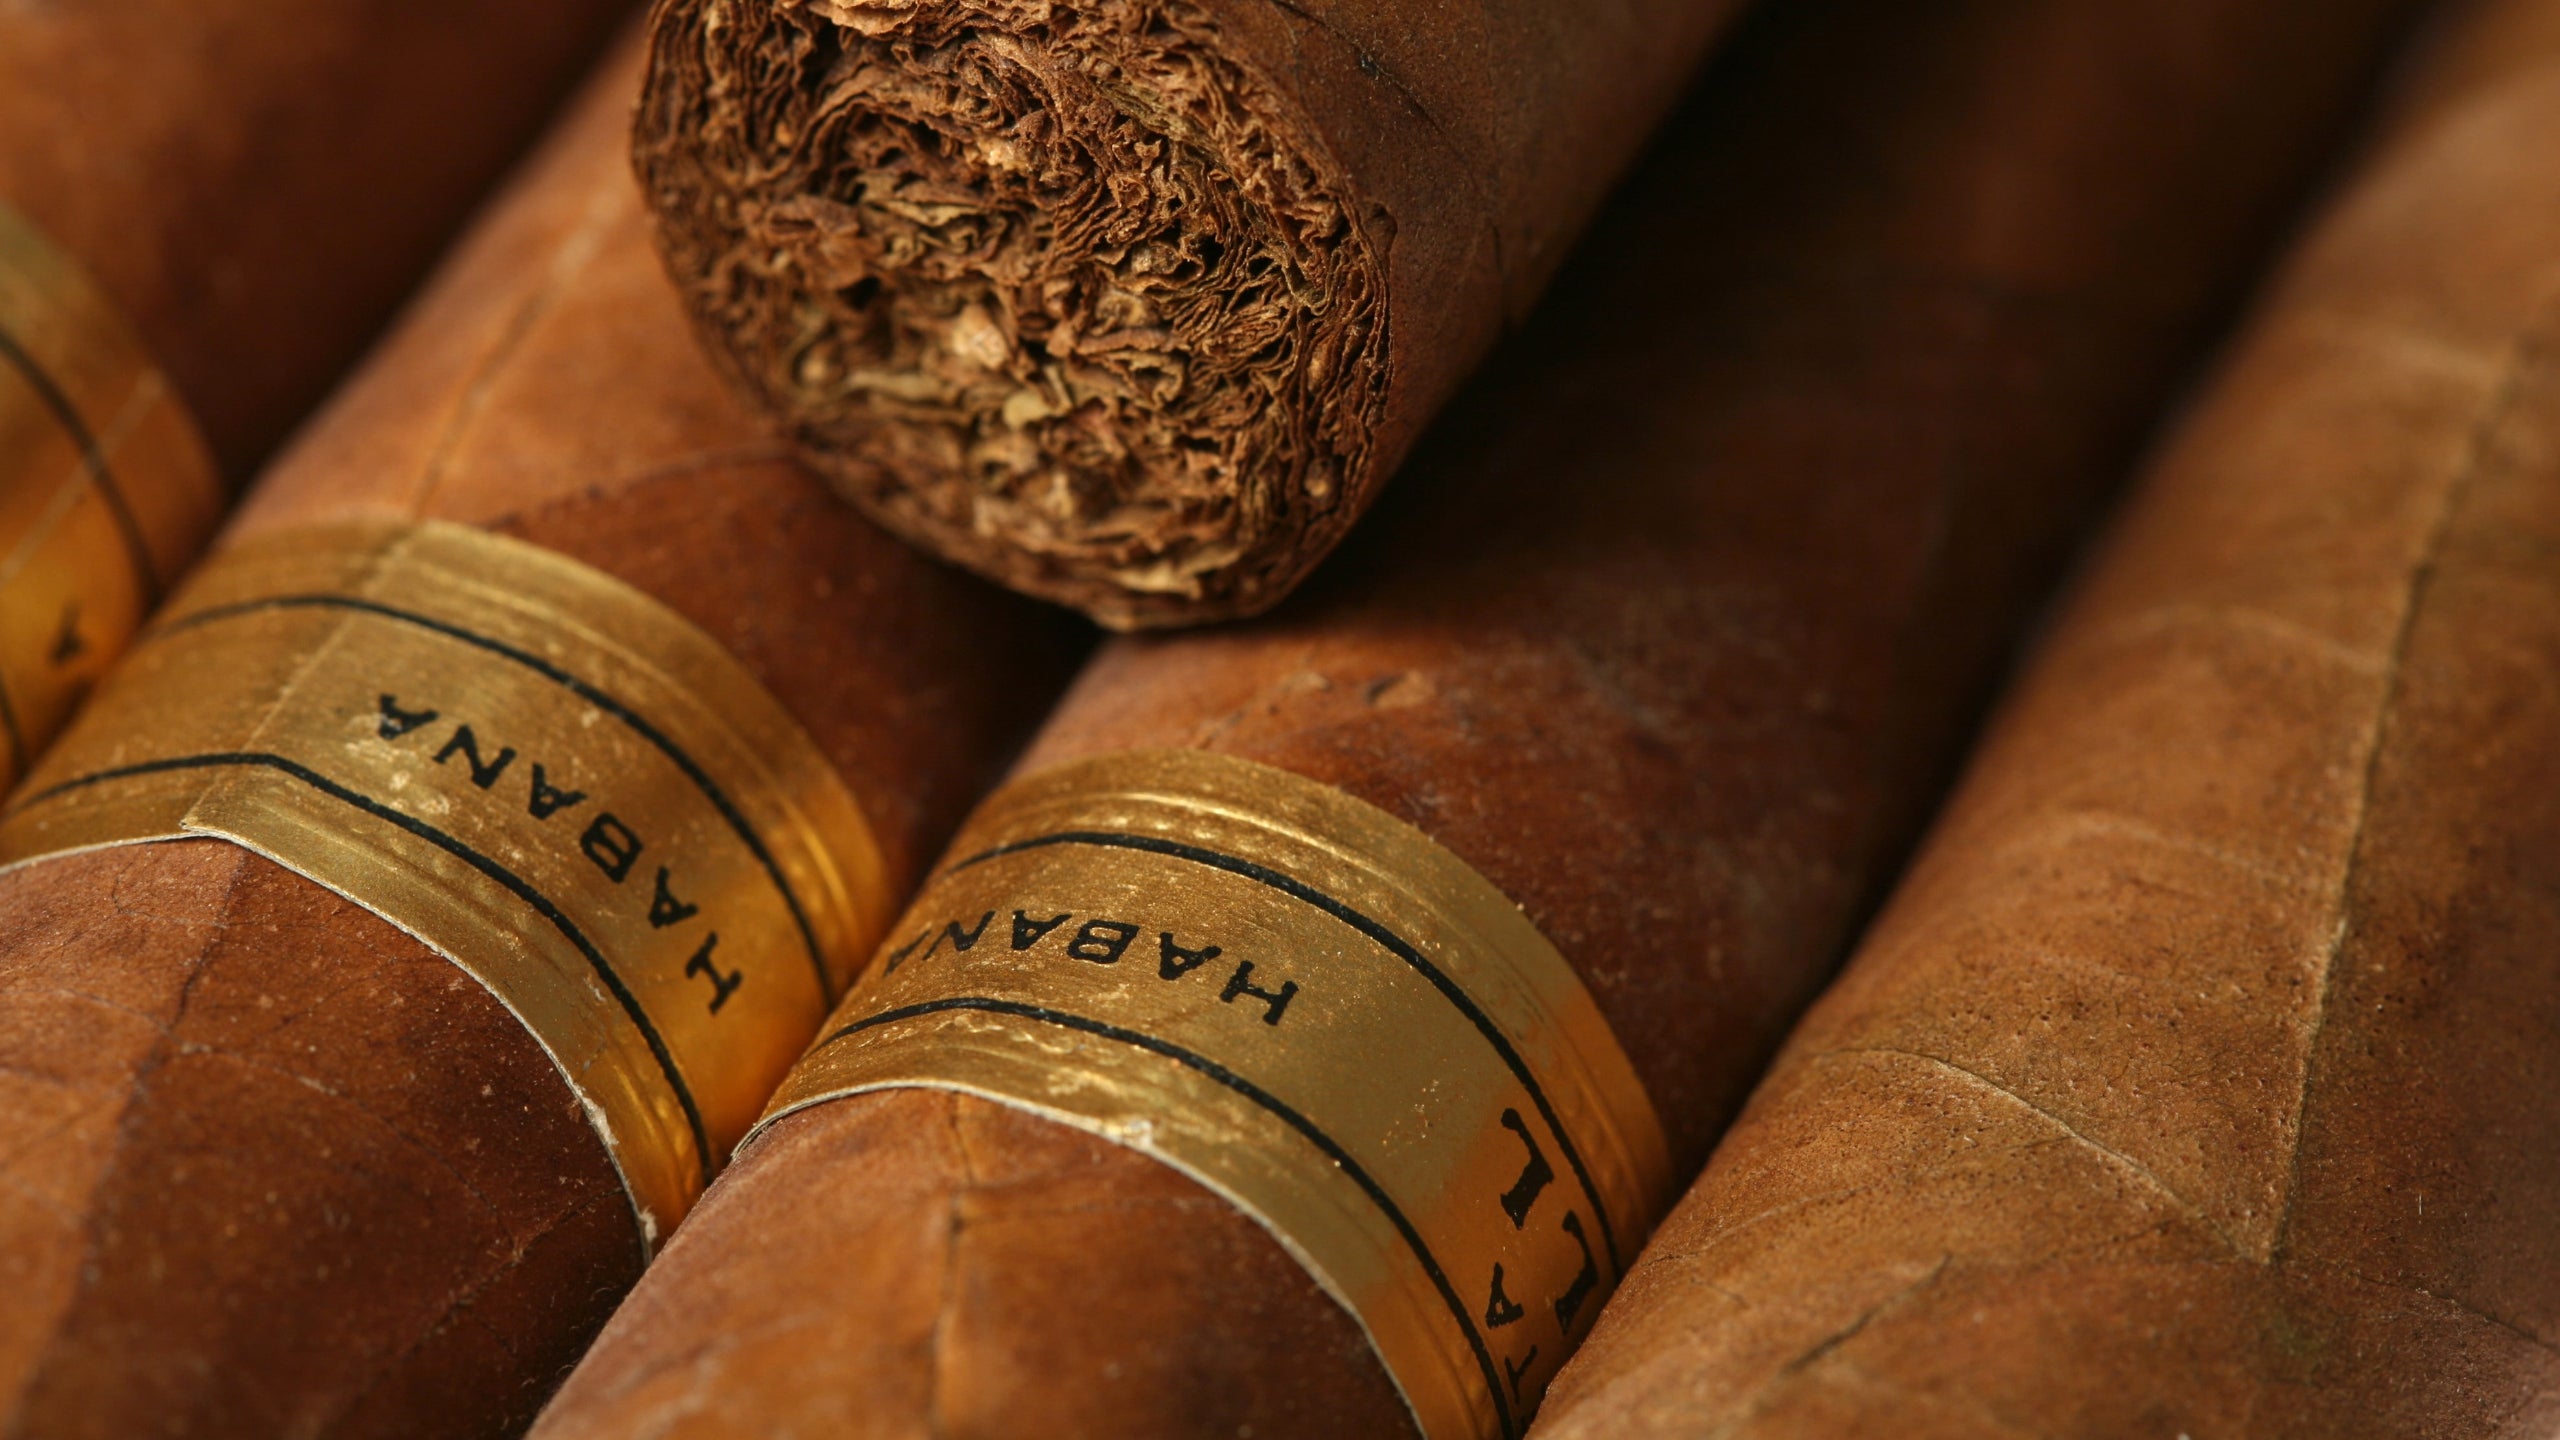 buy habanos cigars india